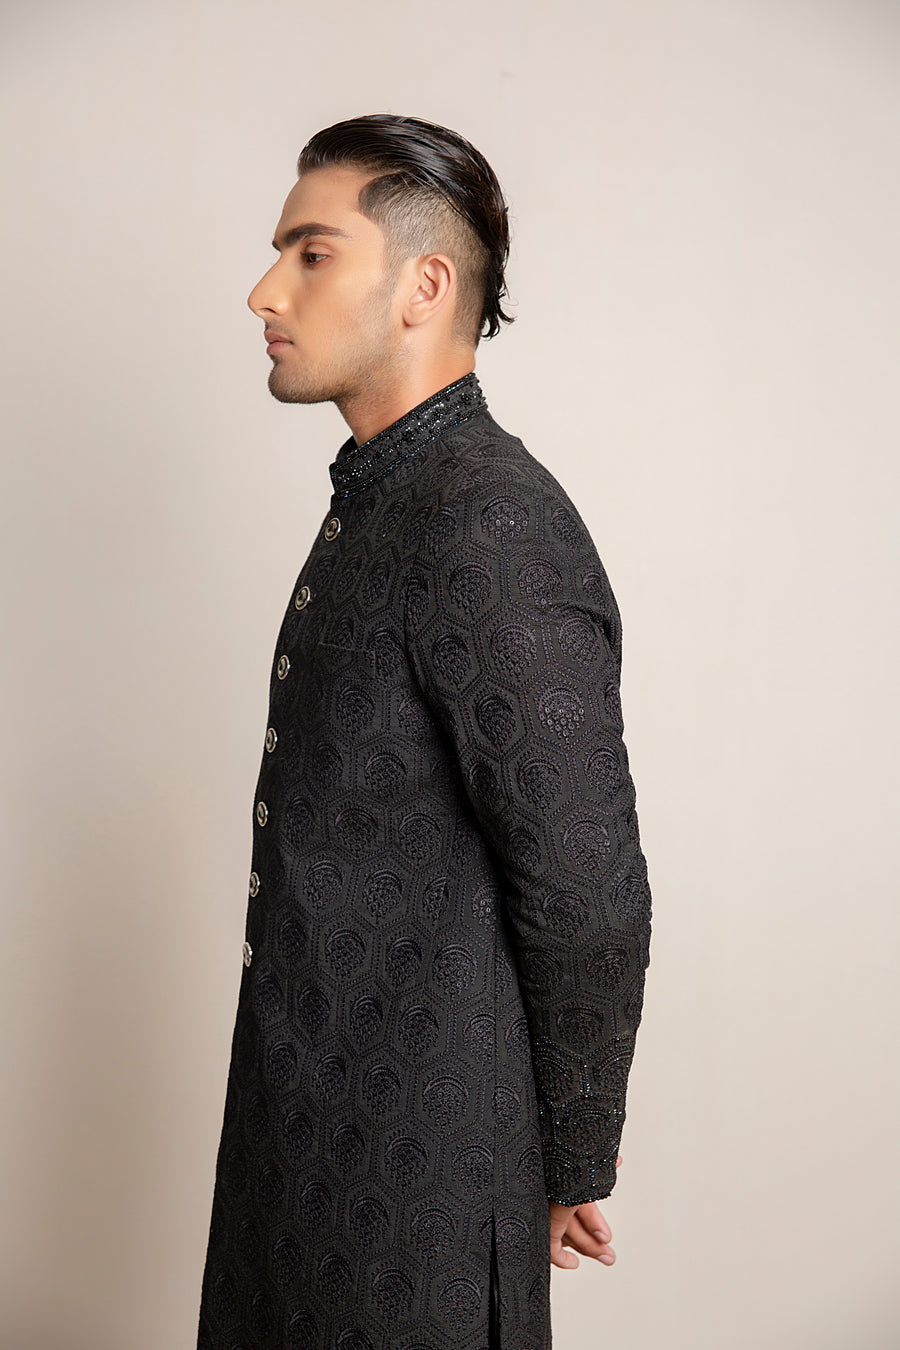 Black Embroidered (sequins) Sherwani